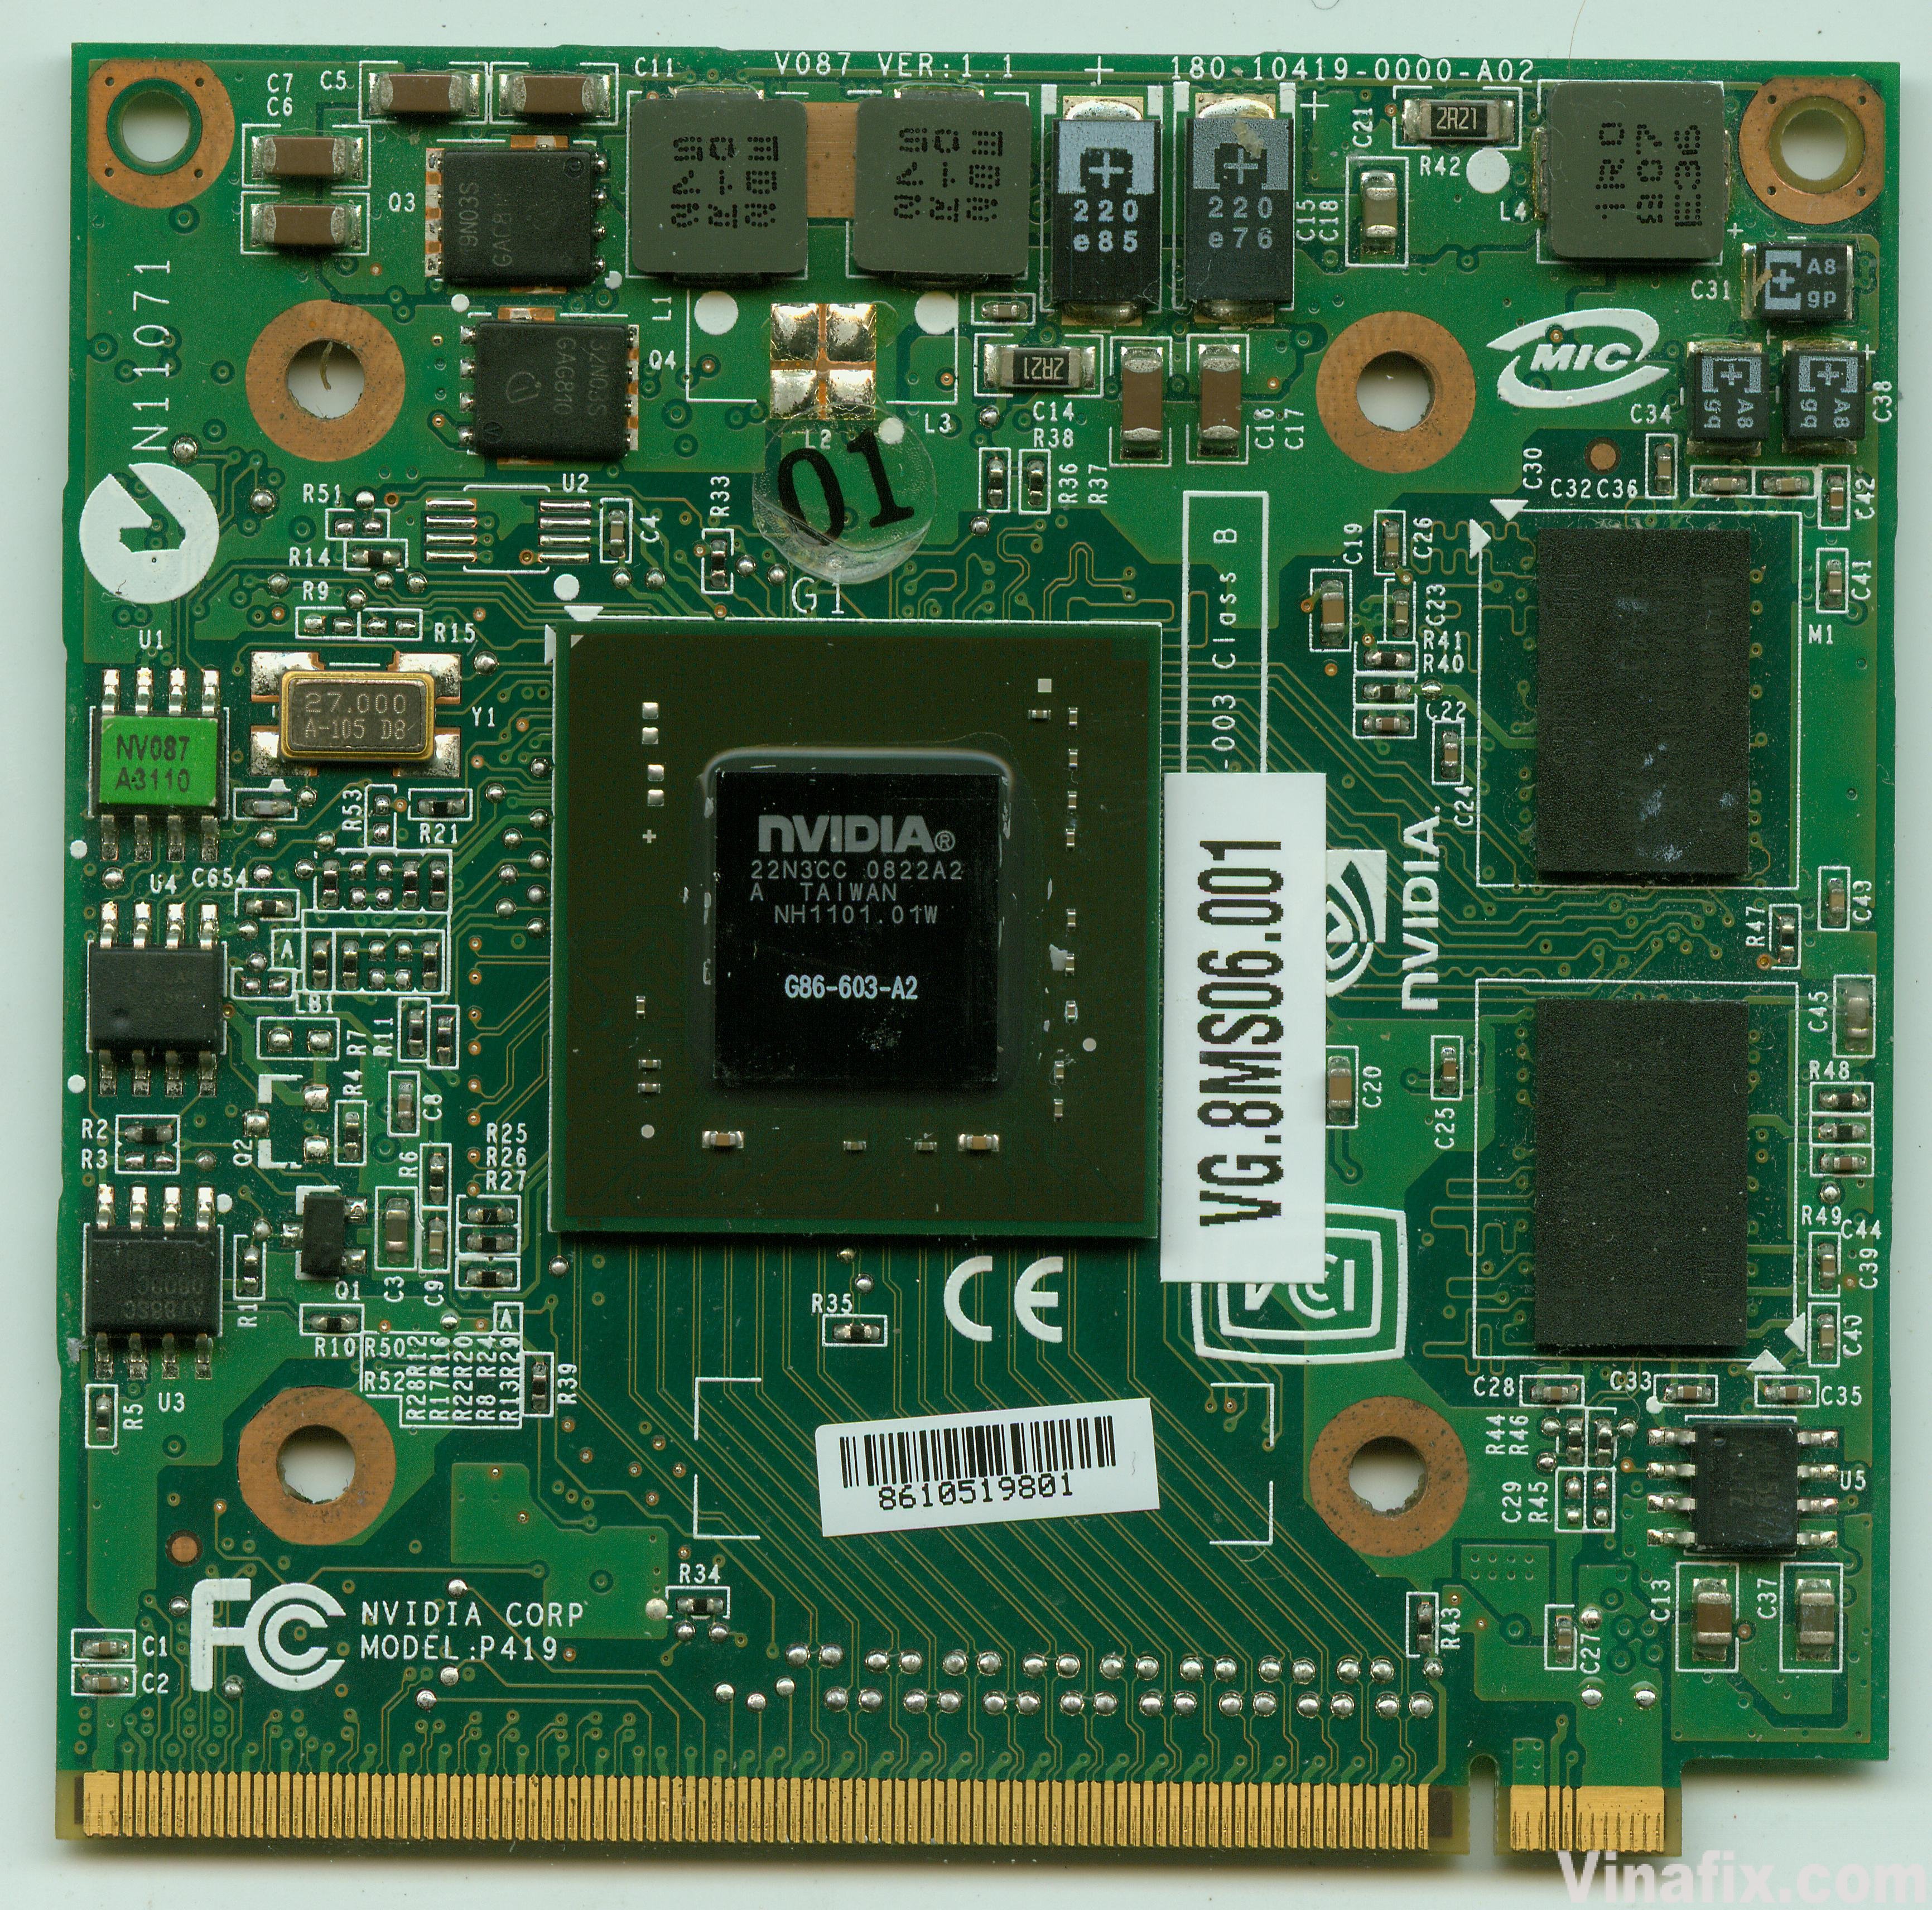 Nvidia P419 (V087 VER 1.1) VG.8MS06.001 (G86-603-A2) photo A